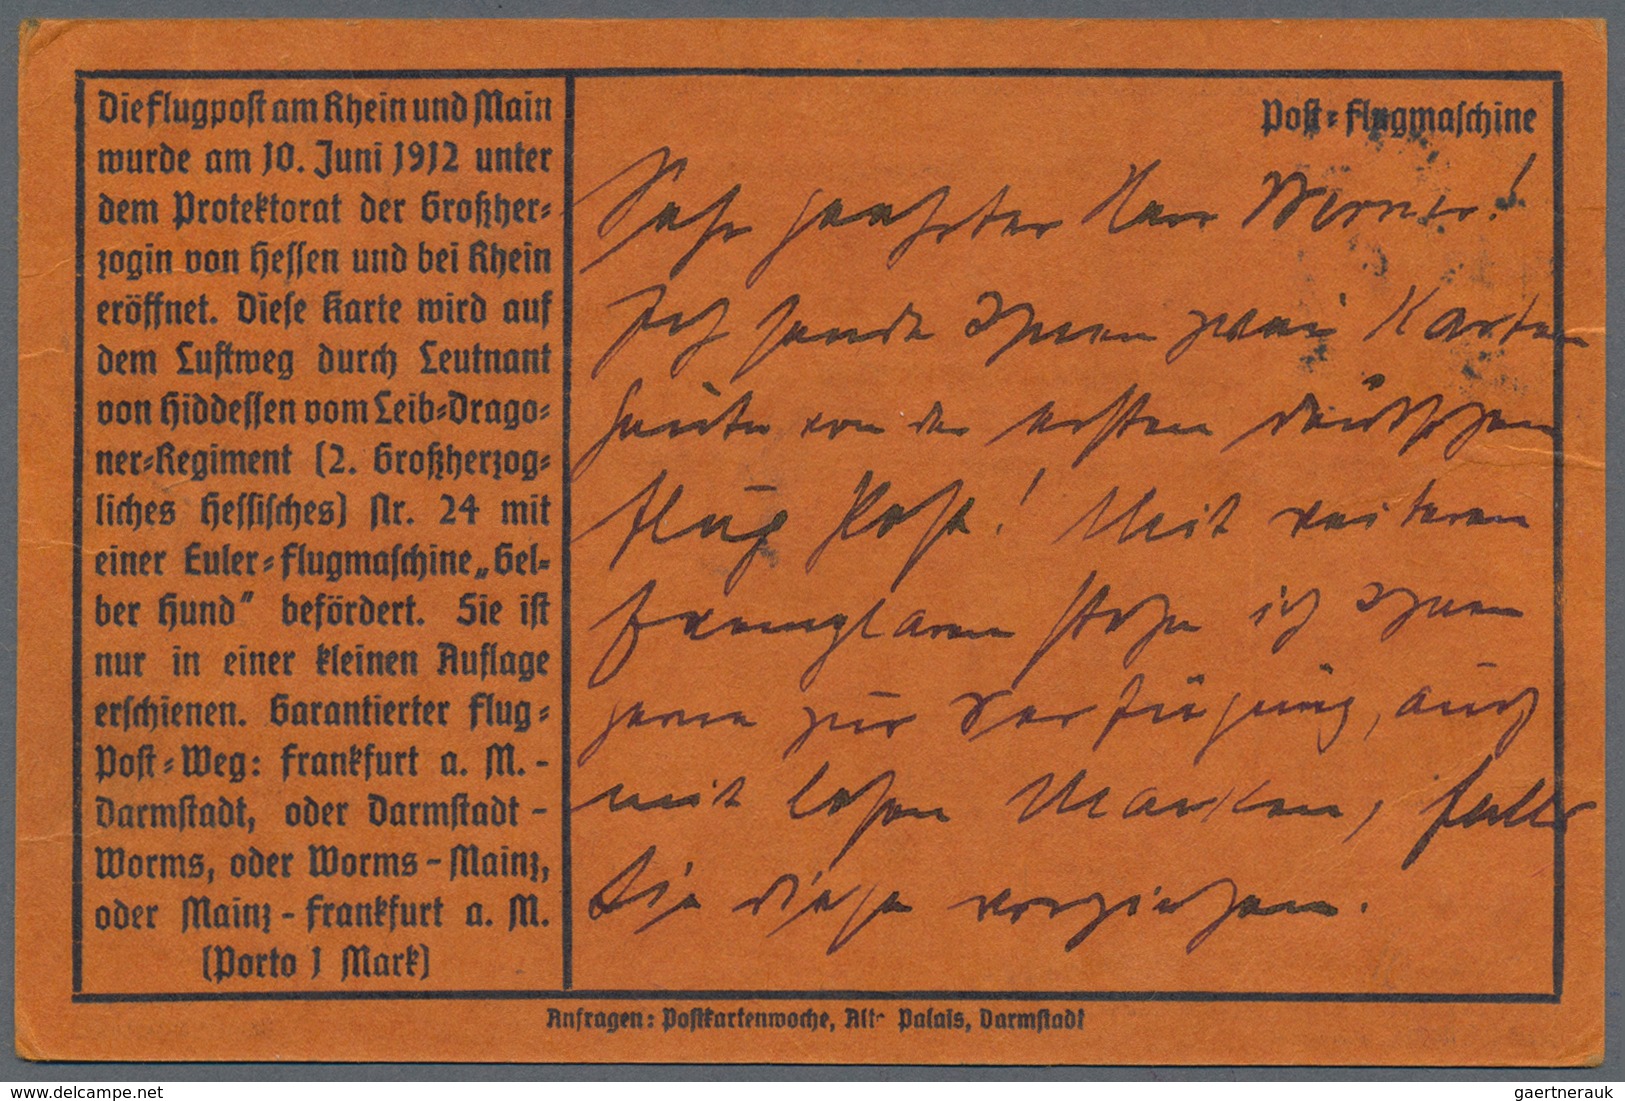 Flugpost Deutschland: 1912. Scarce Pioneer Gelber Hund Flugpost / Yellow Dog Airmail From Frankfurt, - Correo Aéreo & Zeppelin